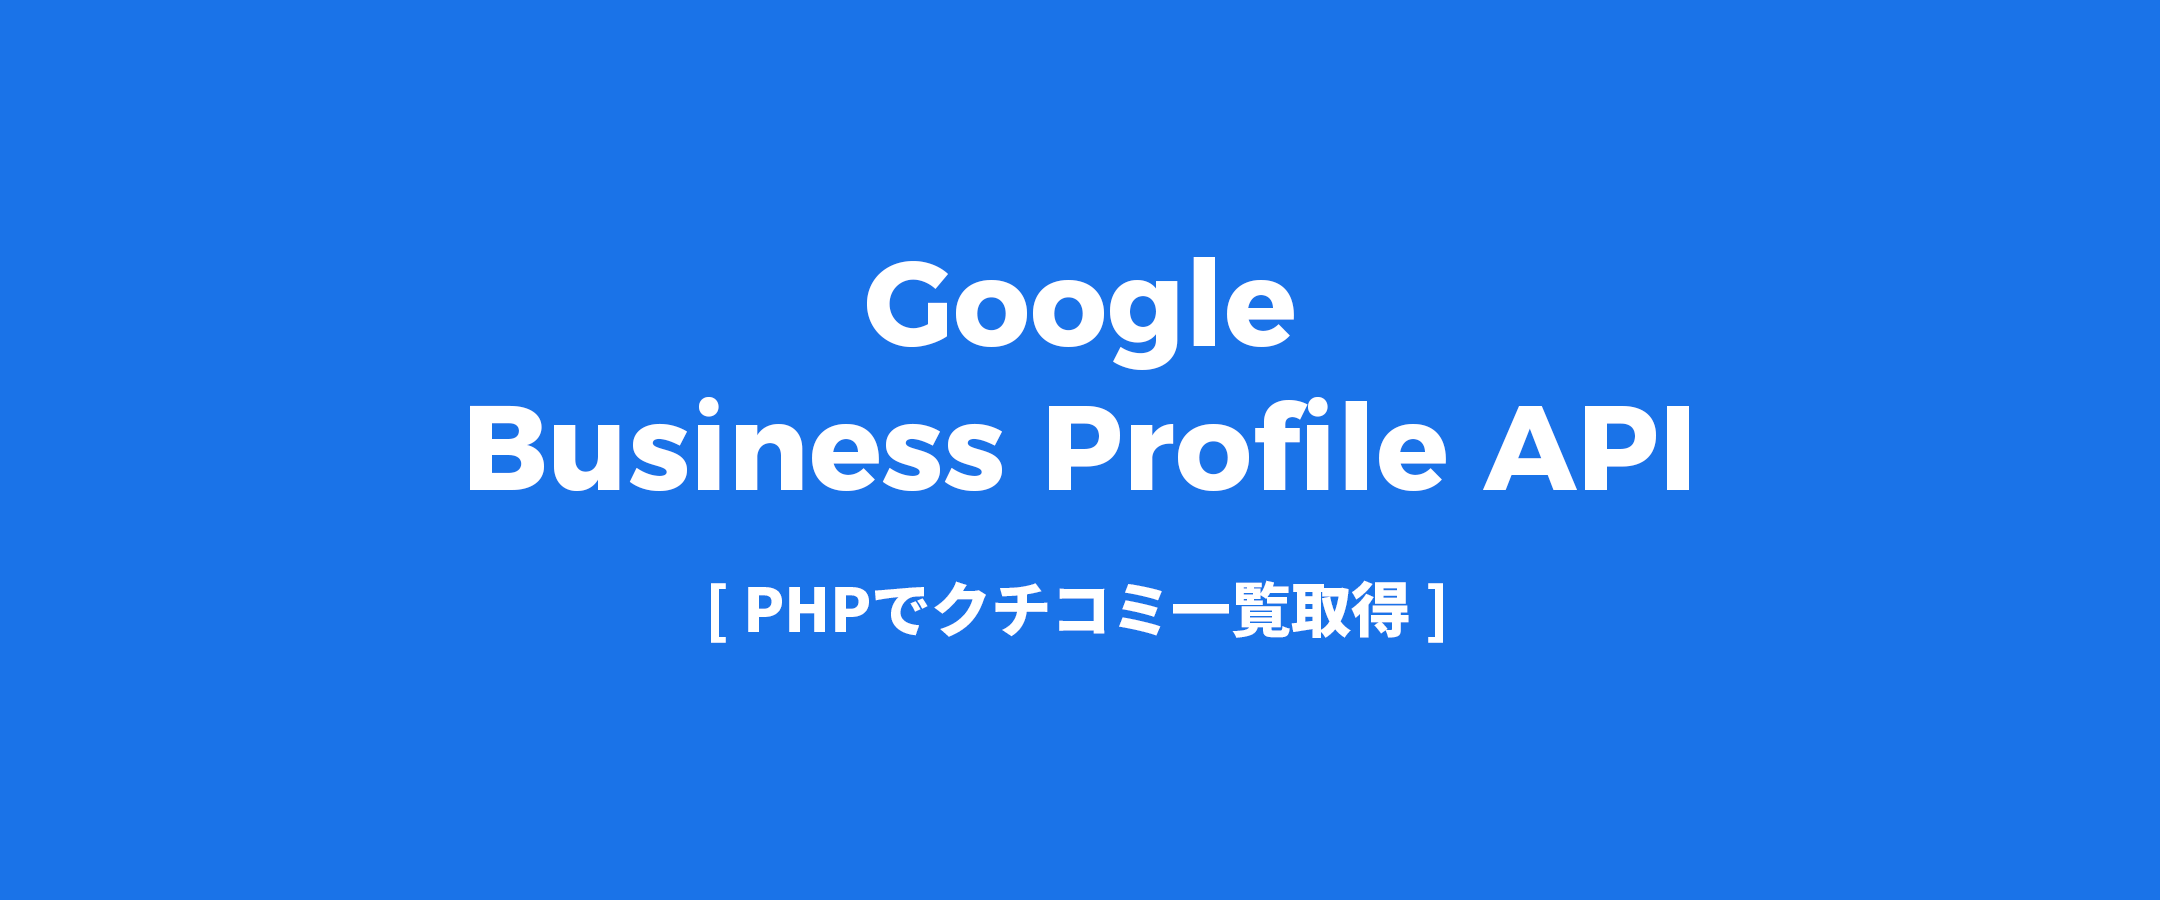 【PHP】Google Business Profile APIを使ってクチコミを取得する